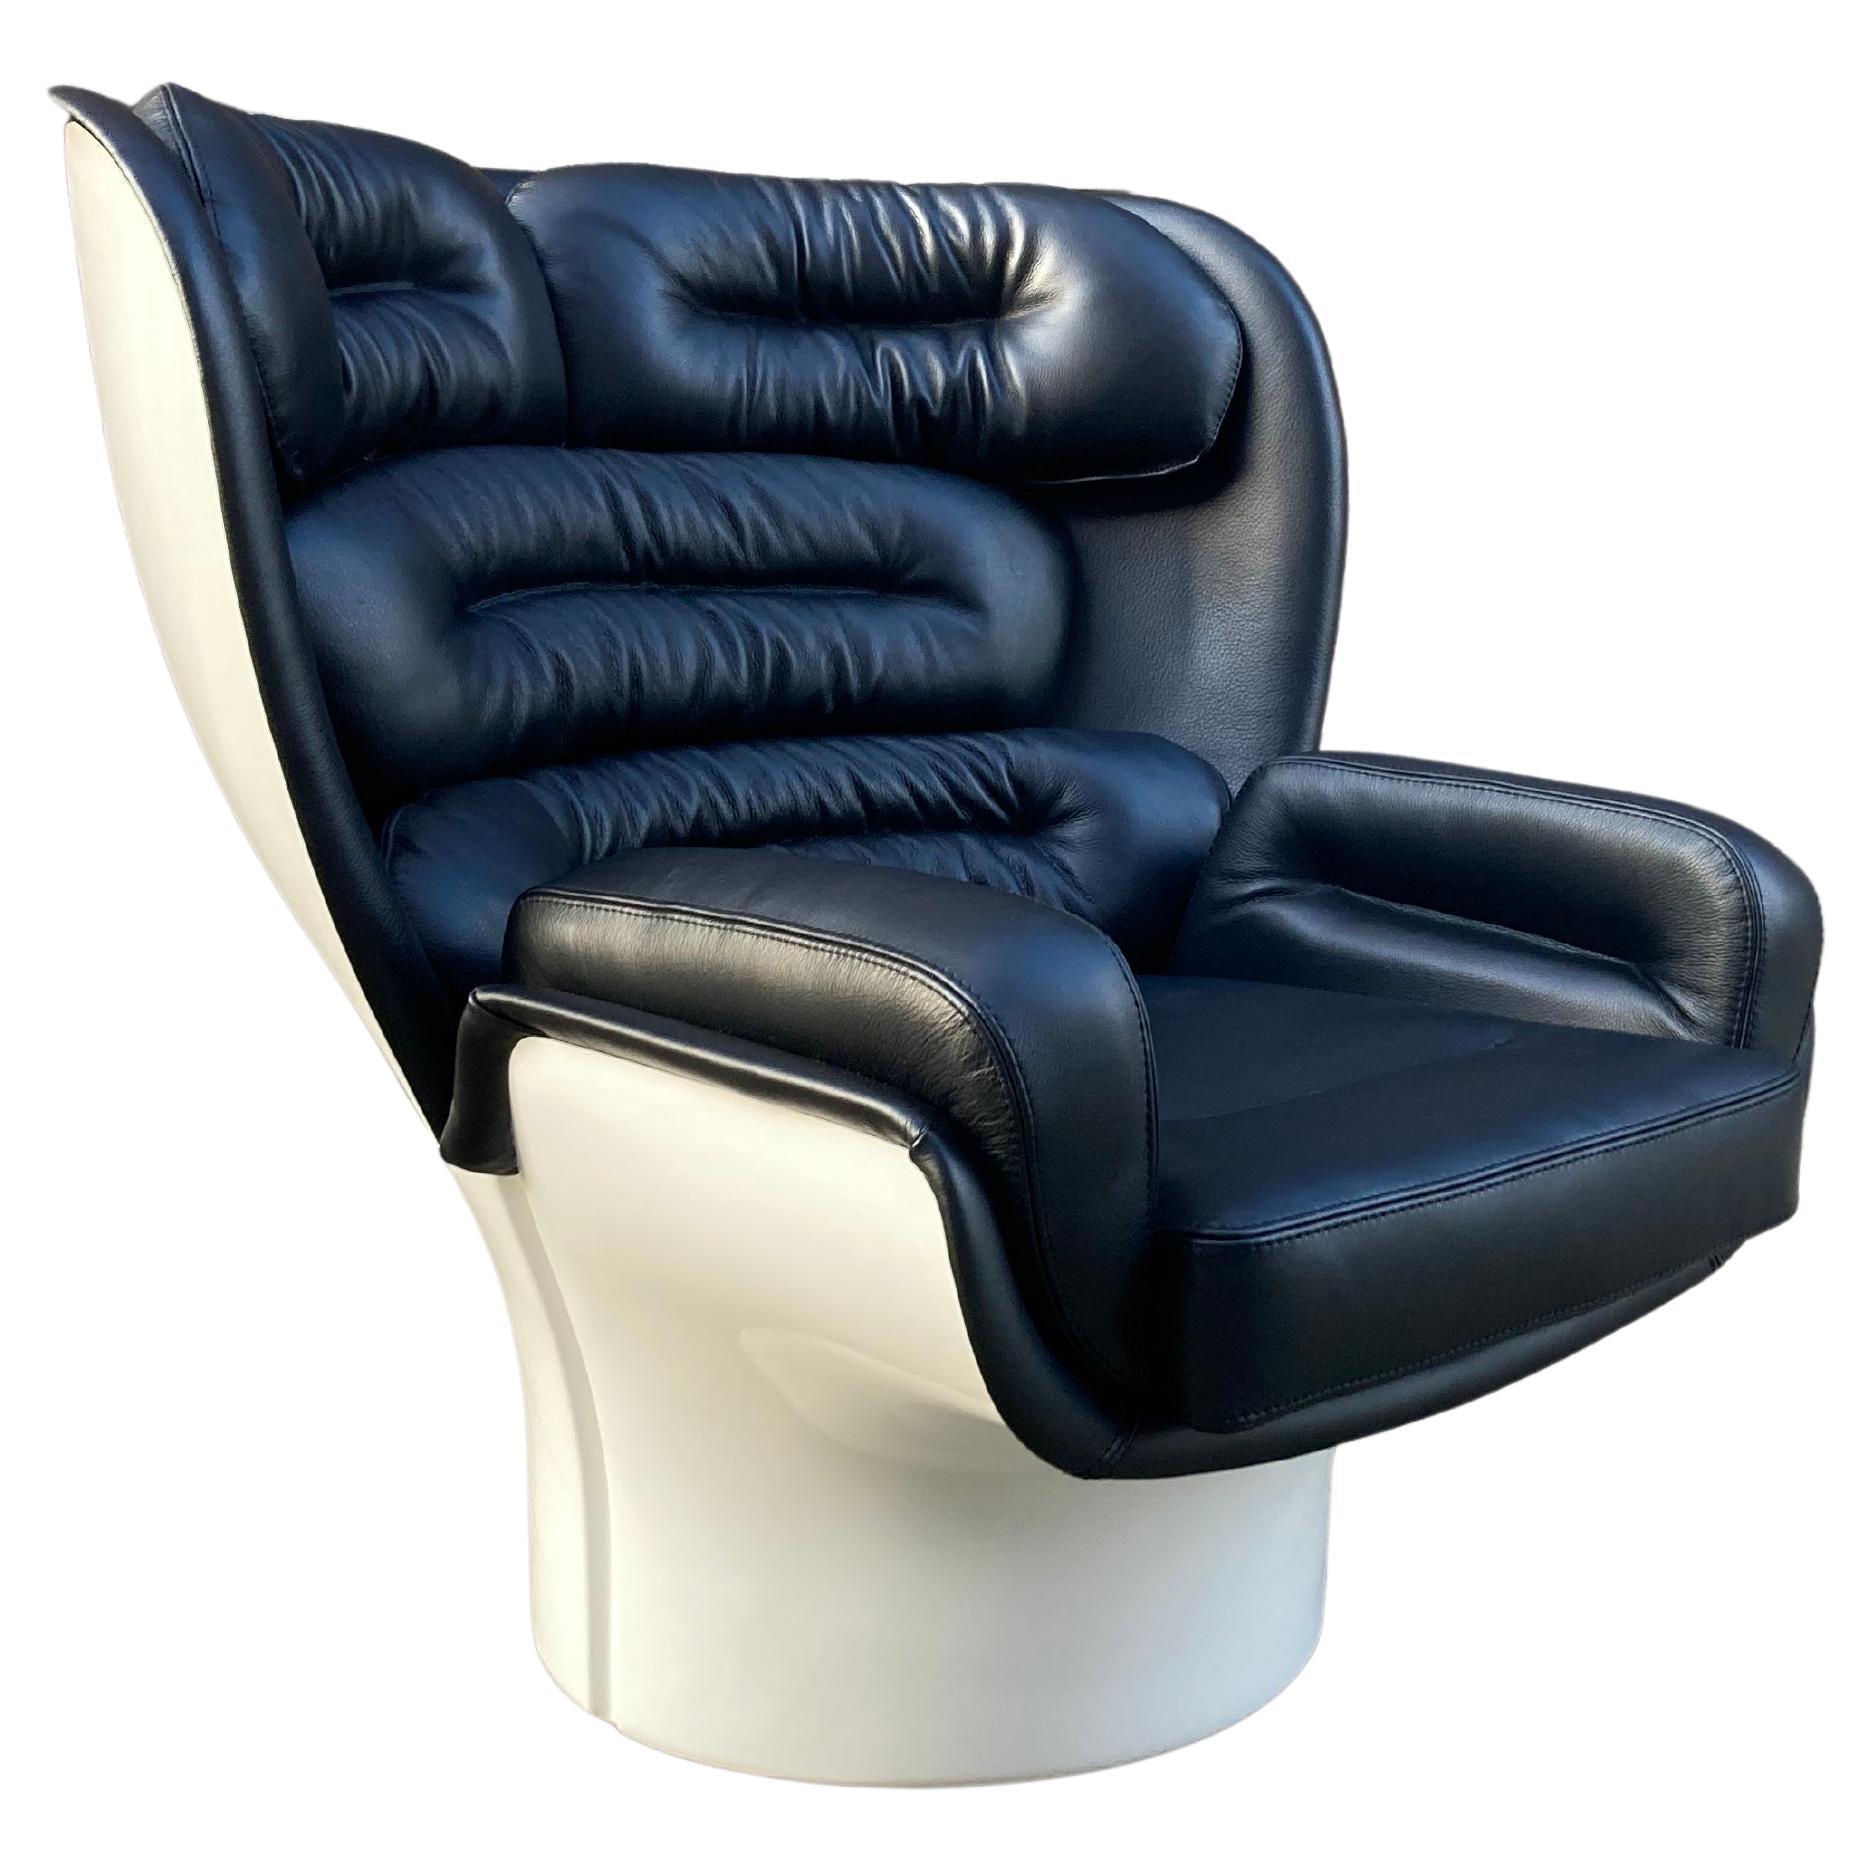 Joe Colombo Elda Chair, Black Leather, White Fiberglass Shell